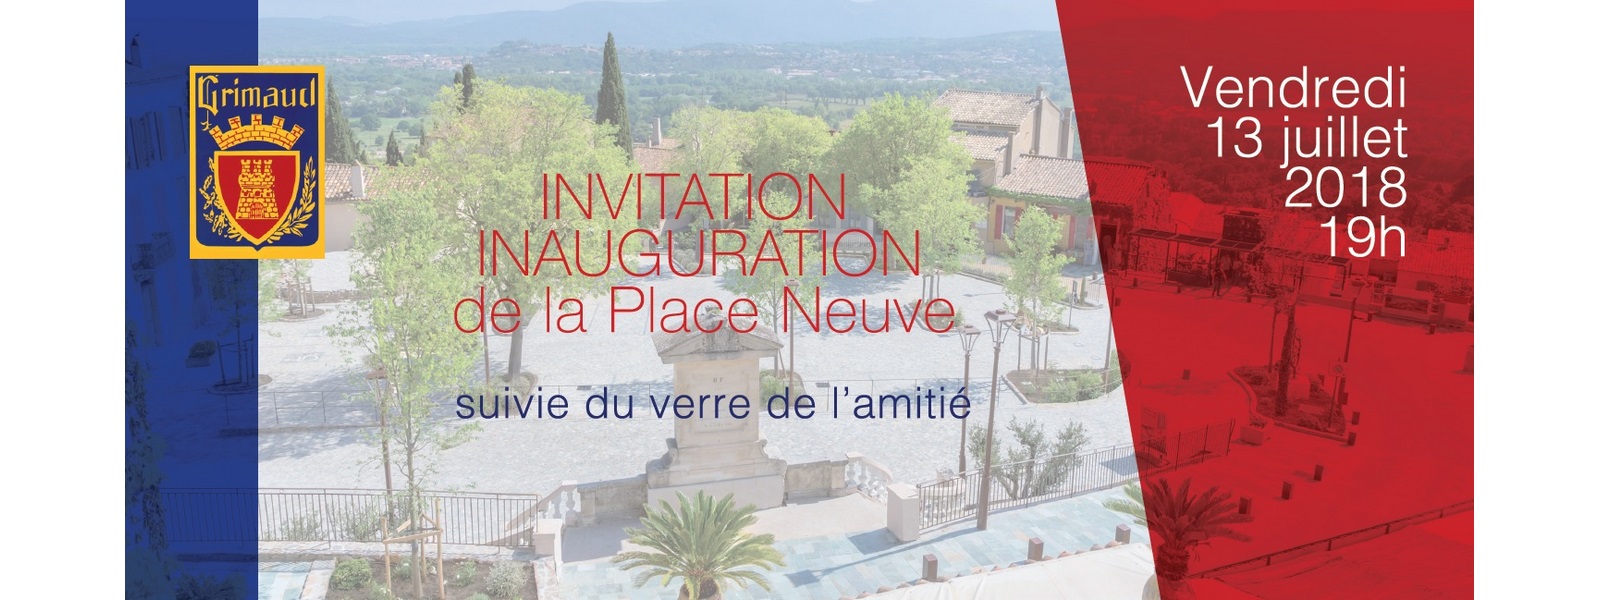 Invitation : Inauguration de la Place Neuve, vendredi 13 juillet 2018